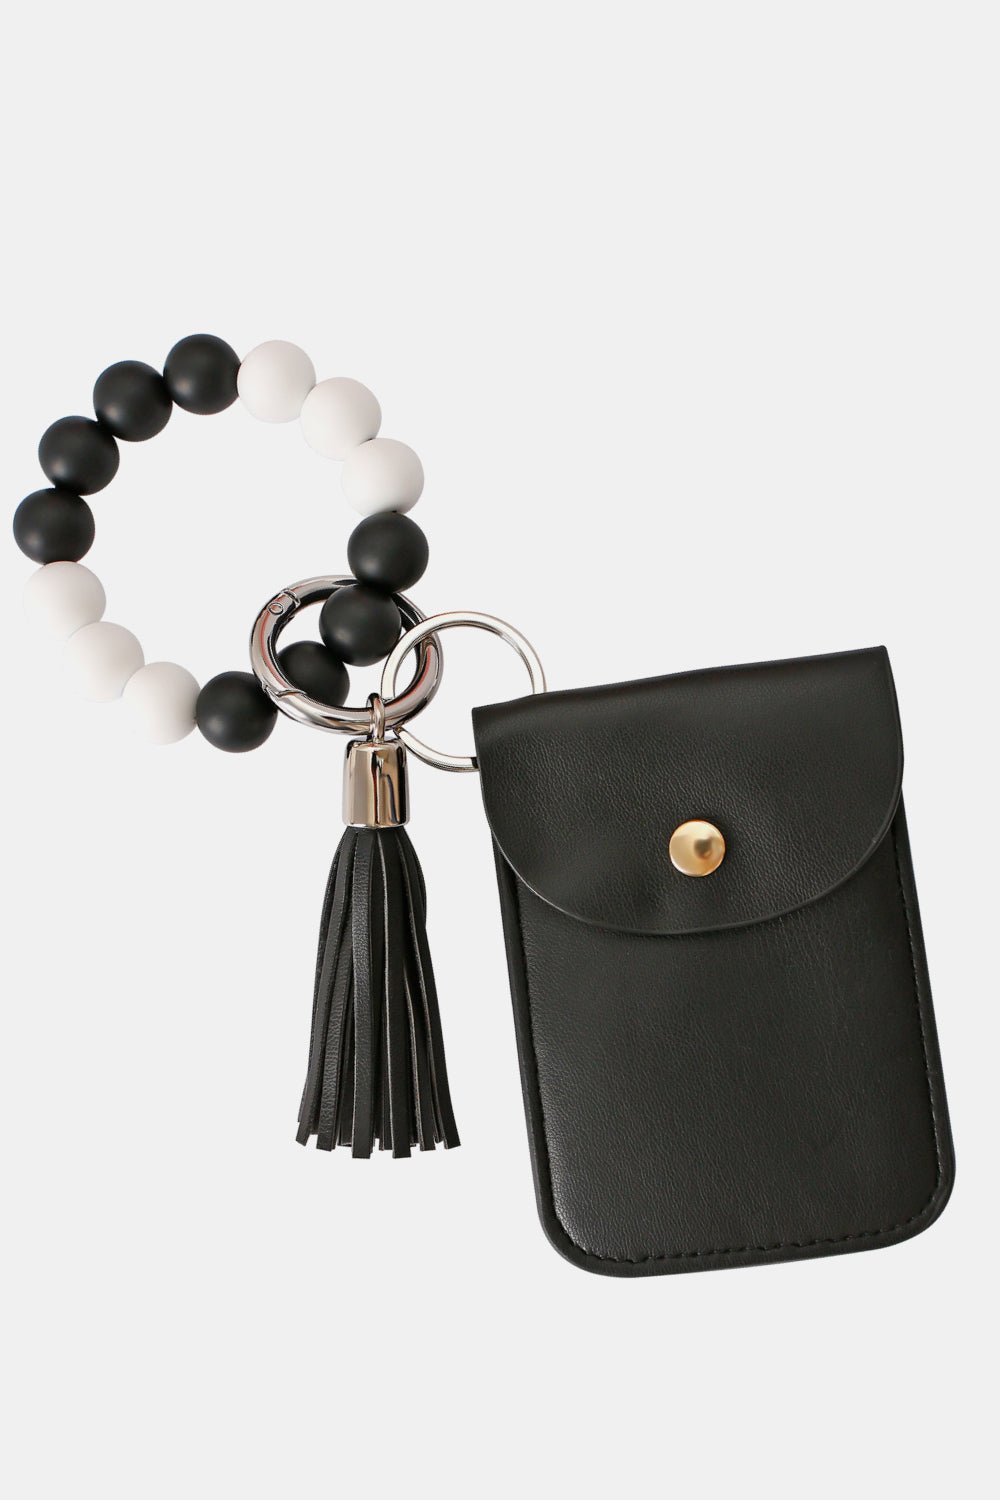 Bead Wristlet Key Chain with Wallet - Tangerine Goddess